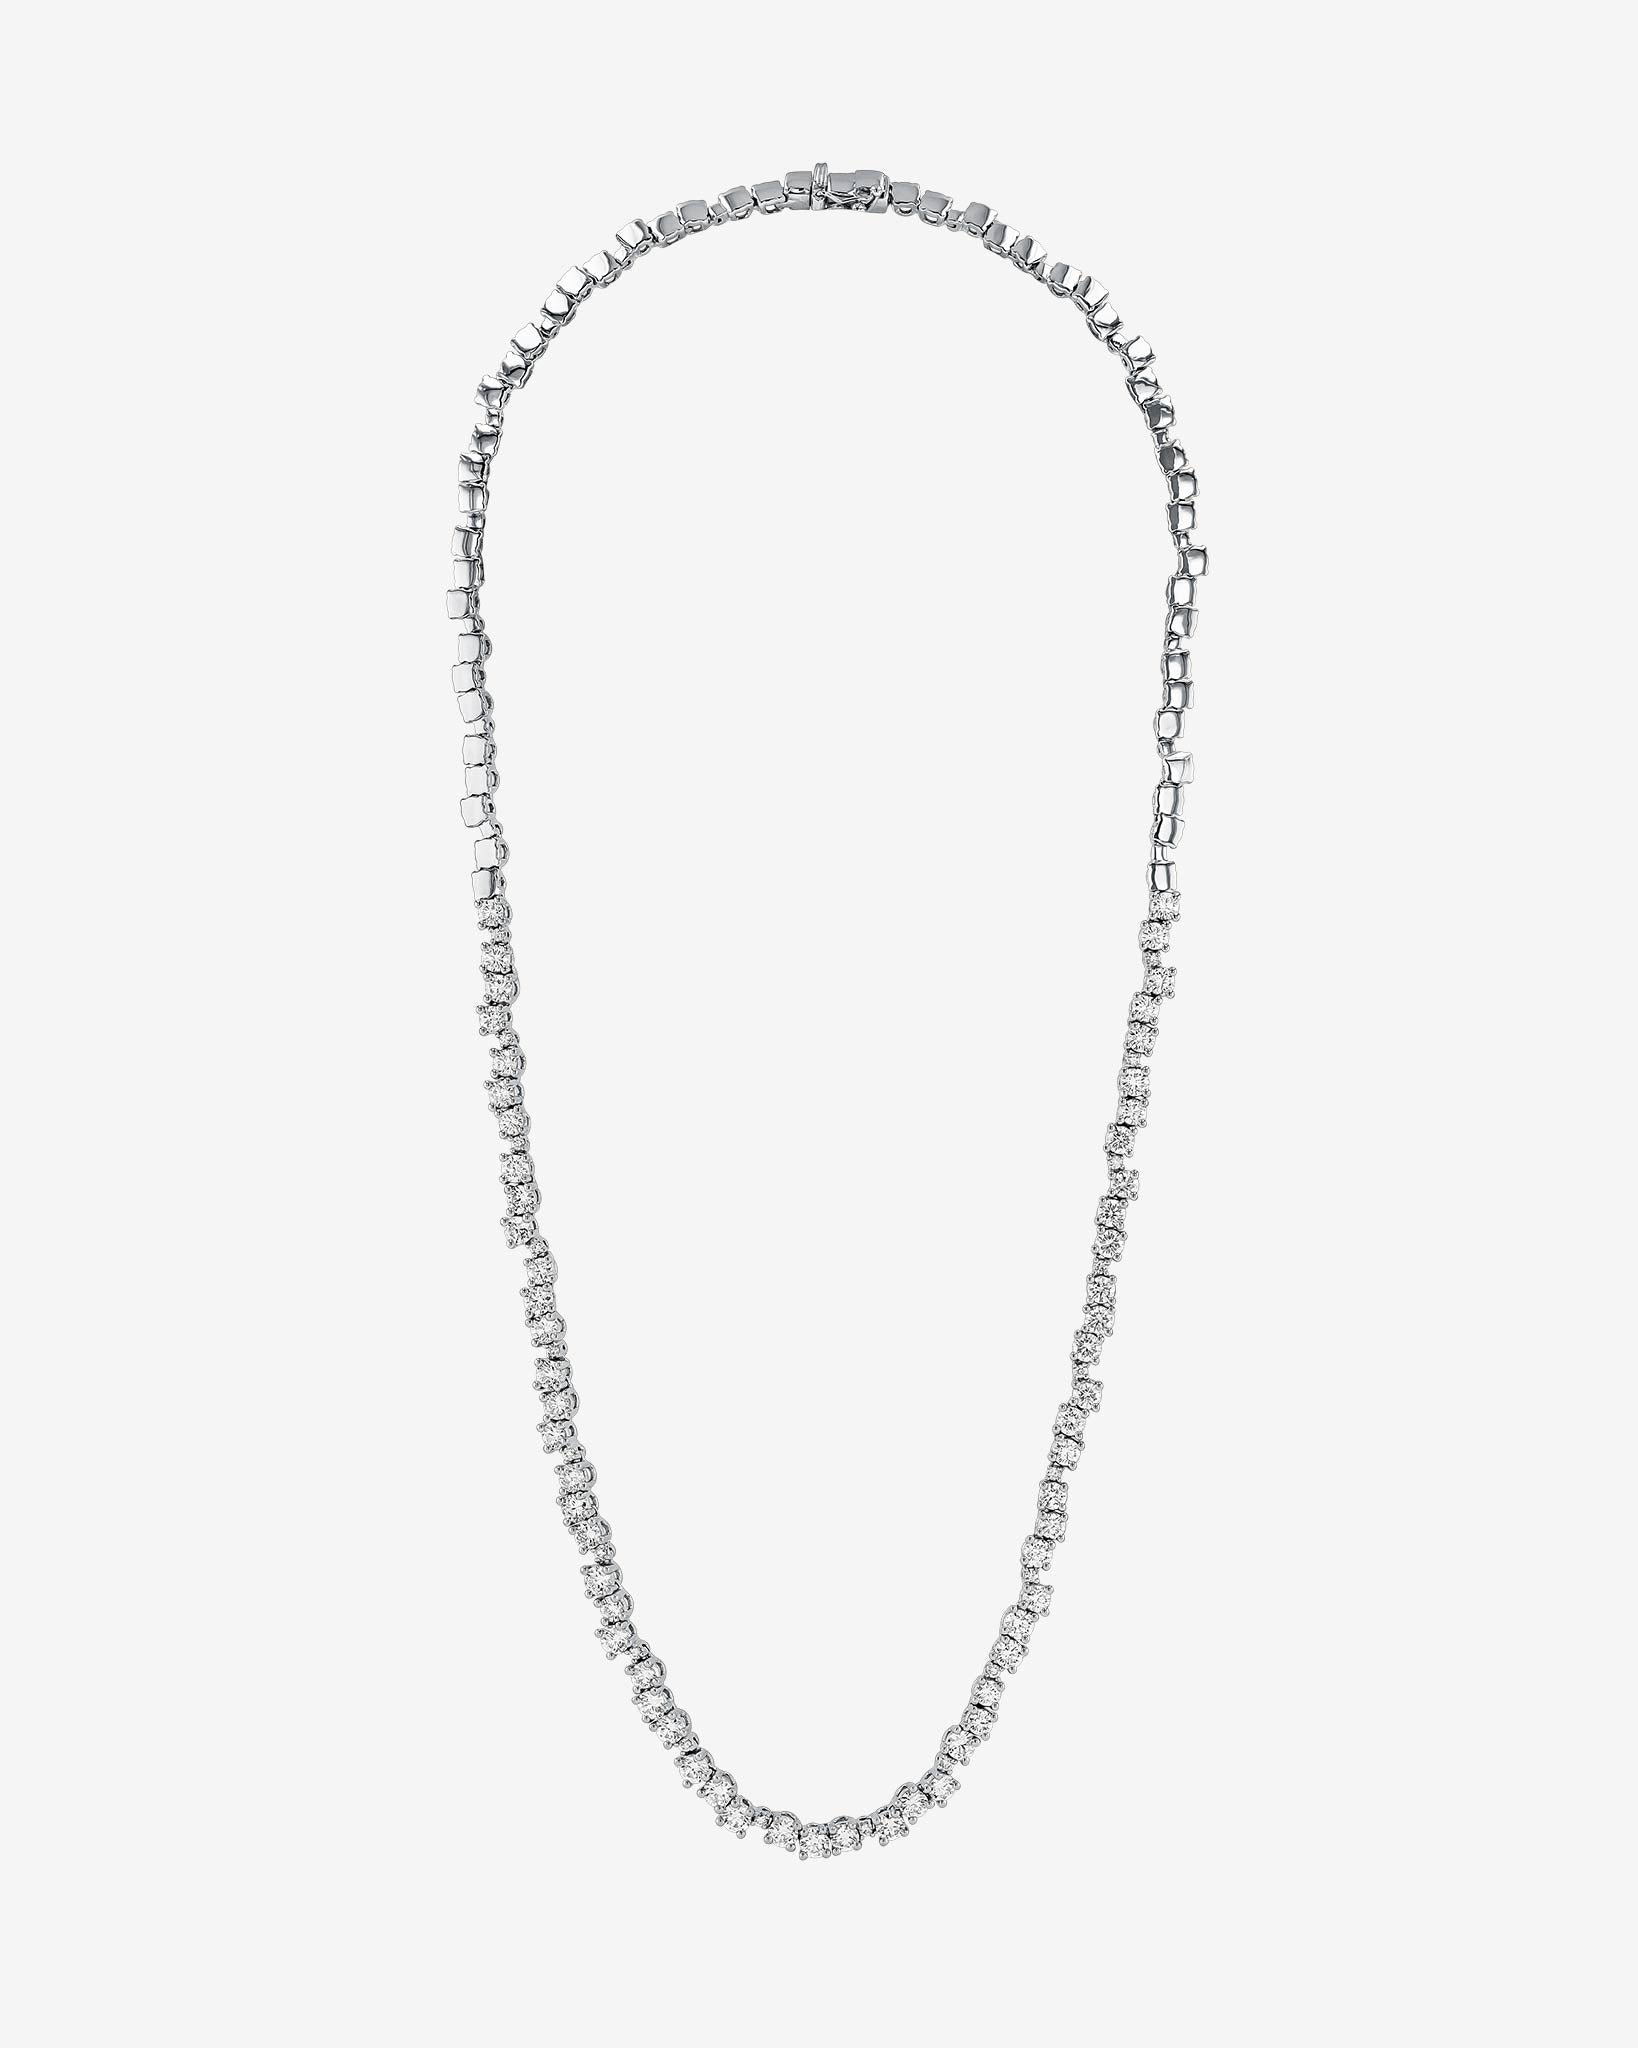 Suzanne Kalan Classic Diamond Round Tennis Necklace in 18k white gold